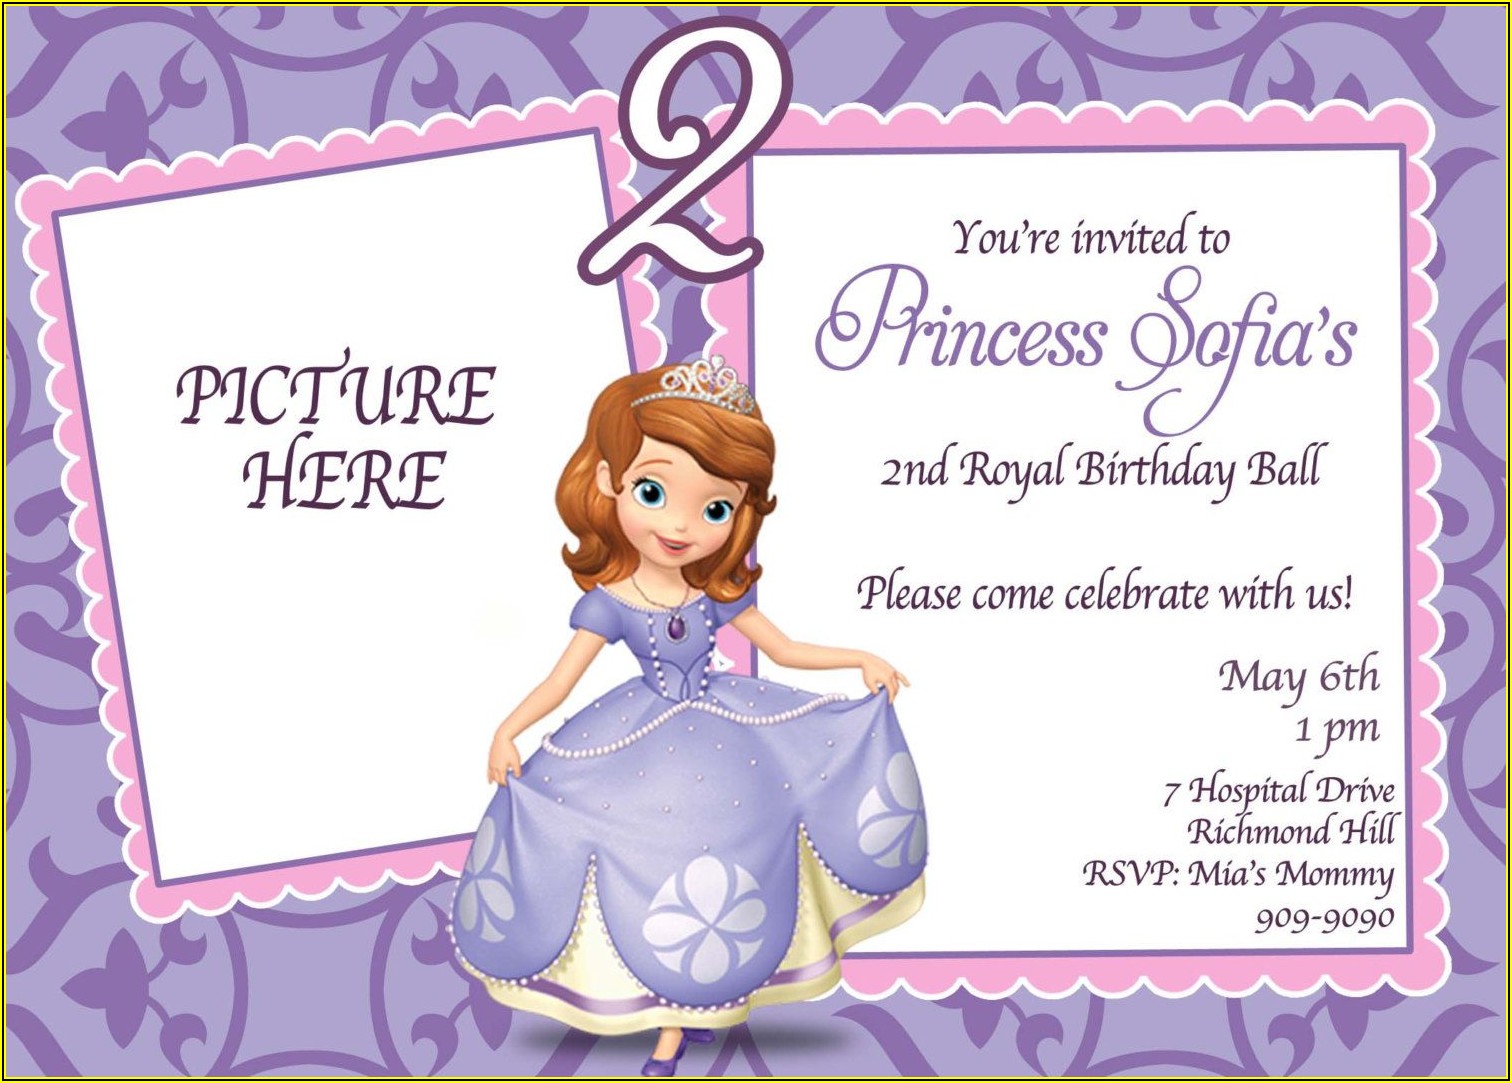 Princess Sofia Party Invitation Templates